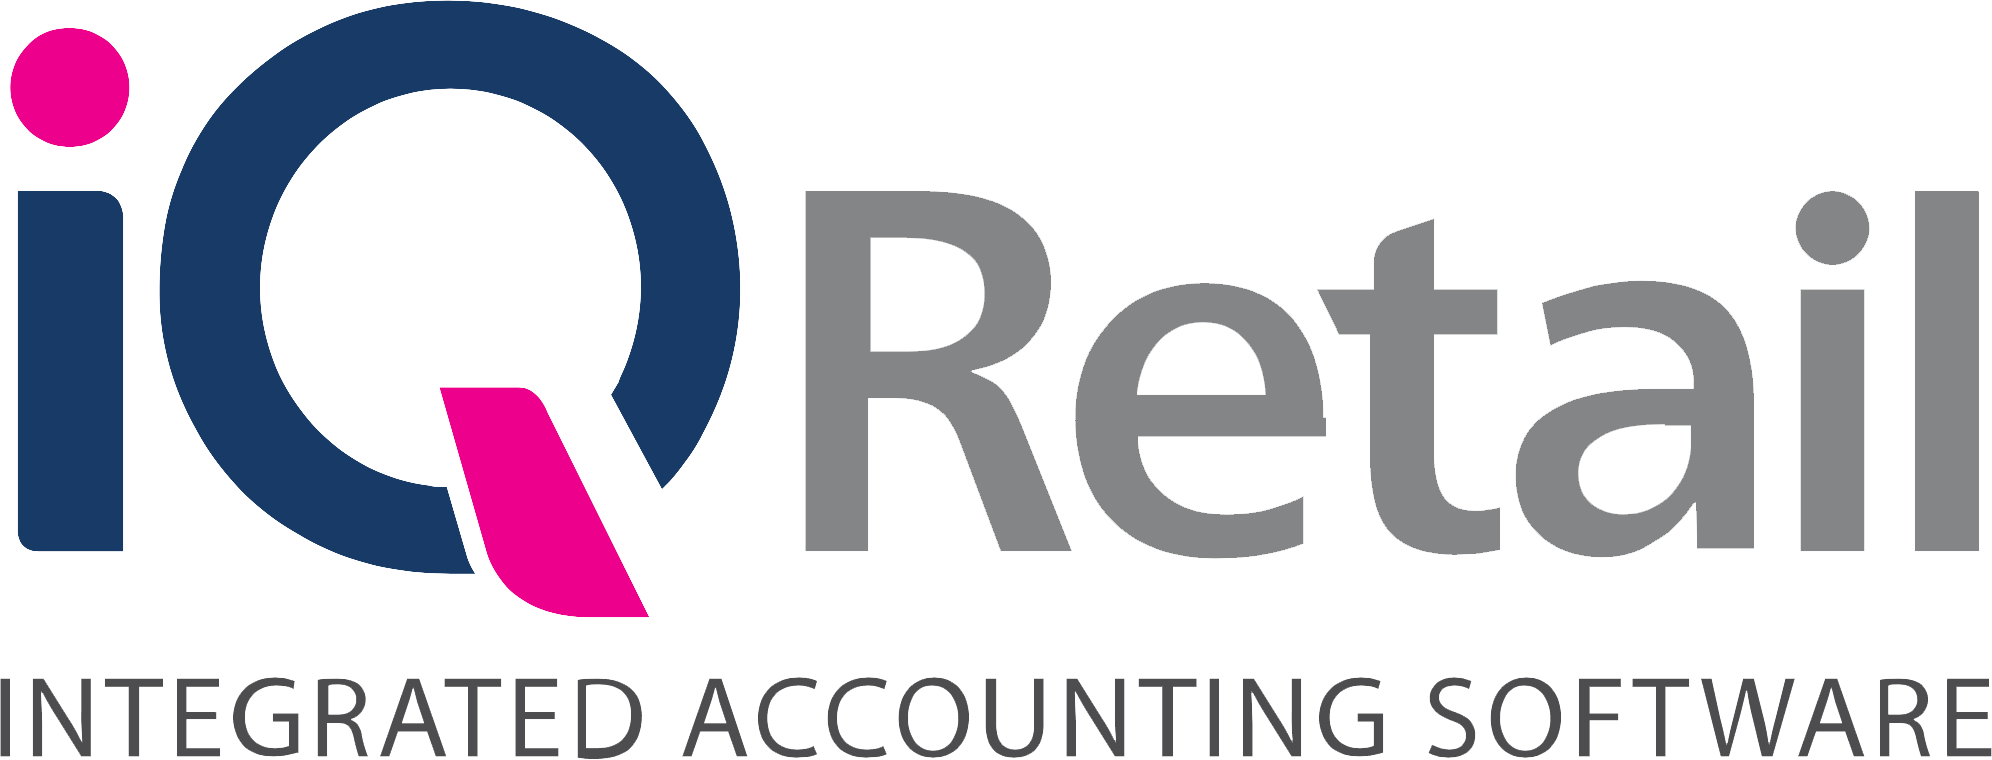 Retail Logo - Account Software. POS. Financial Accounting Software